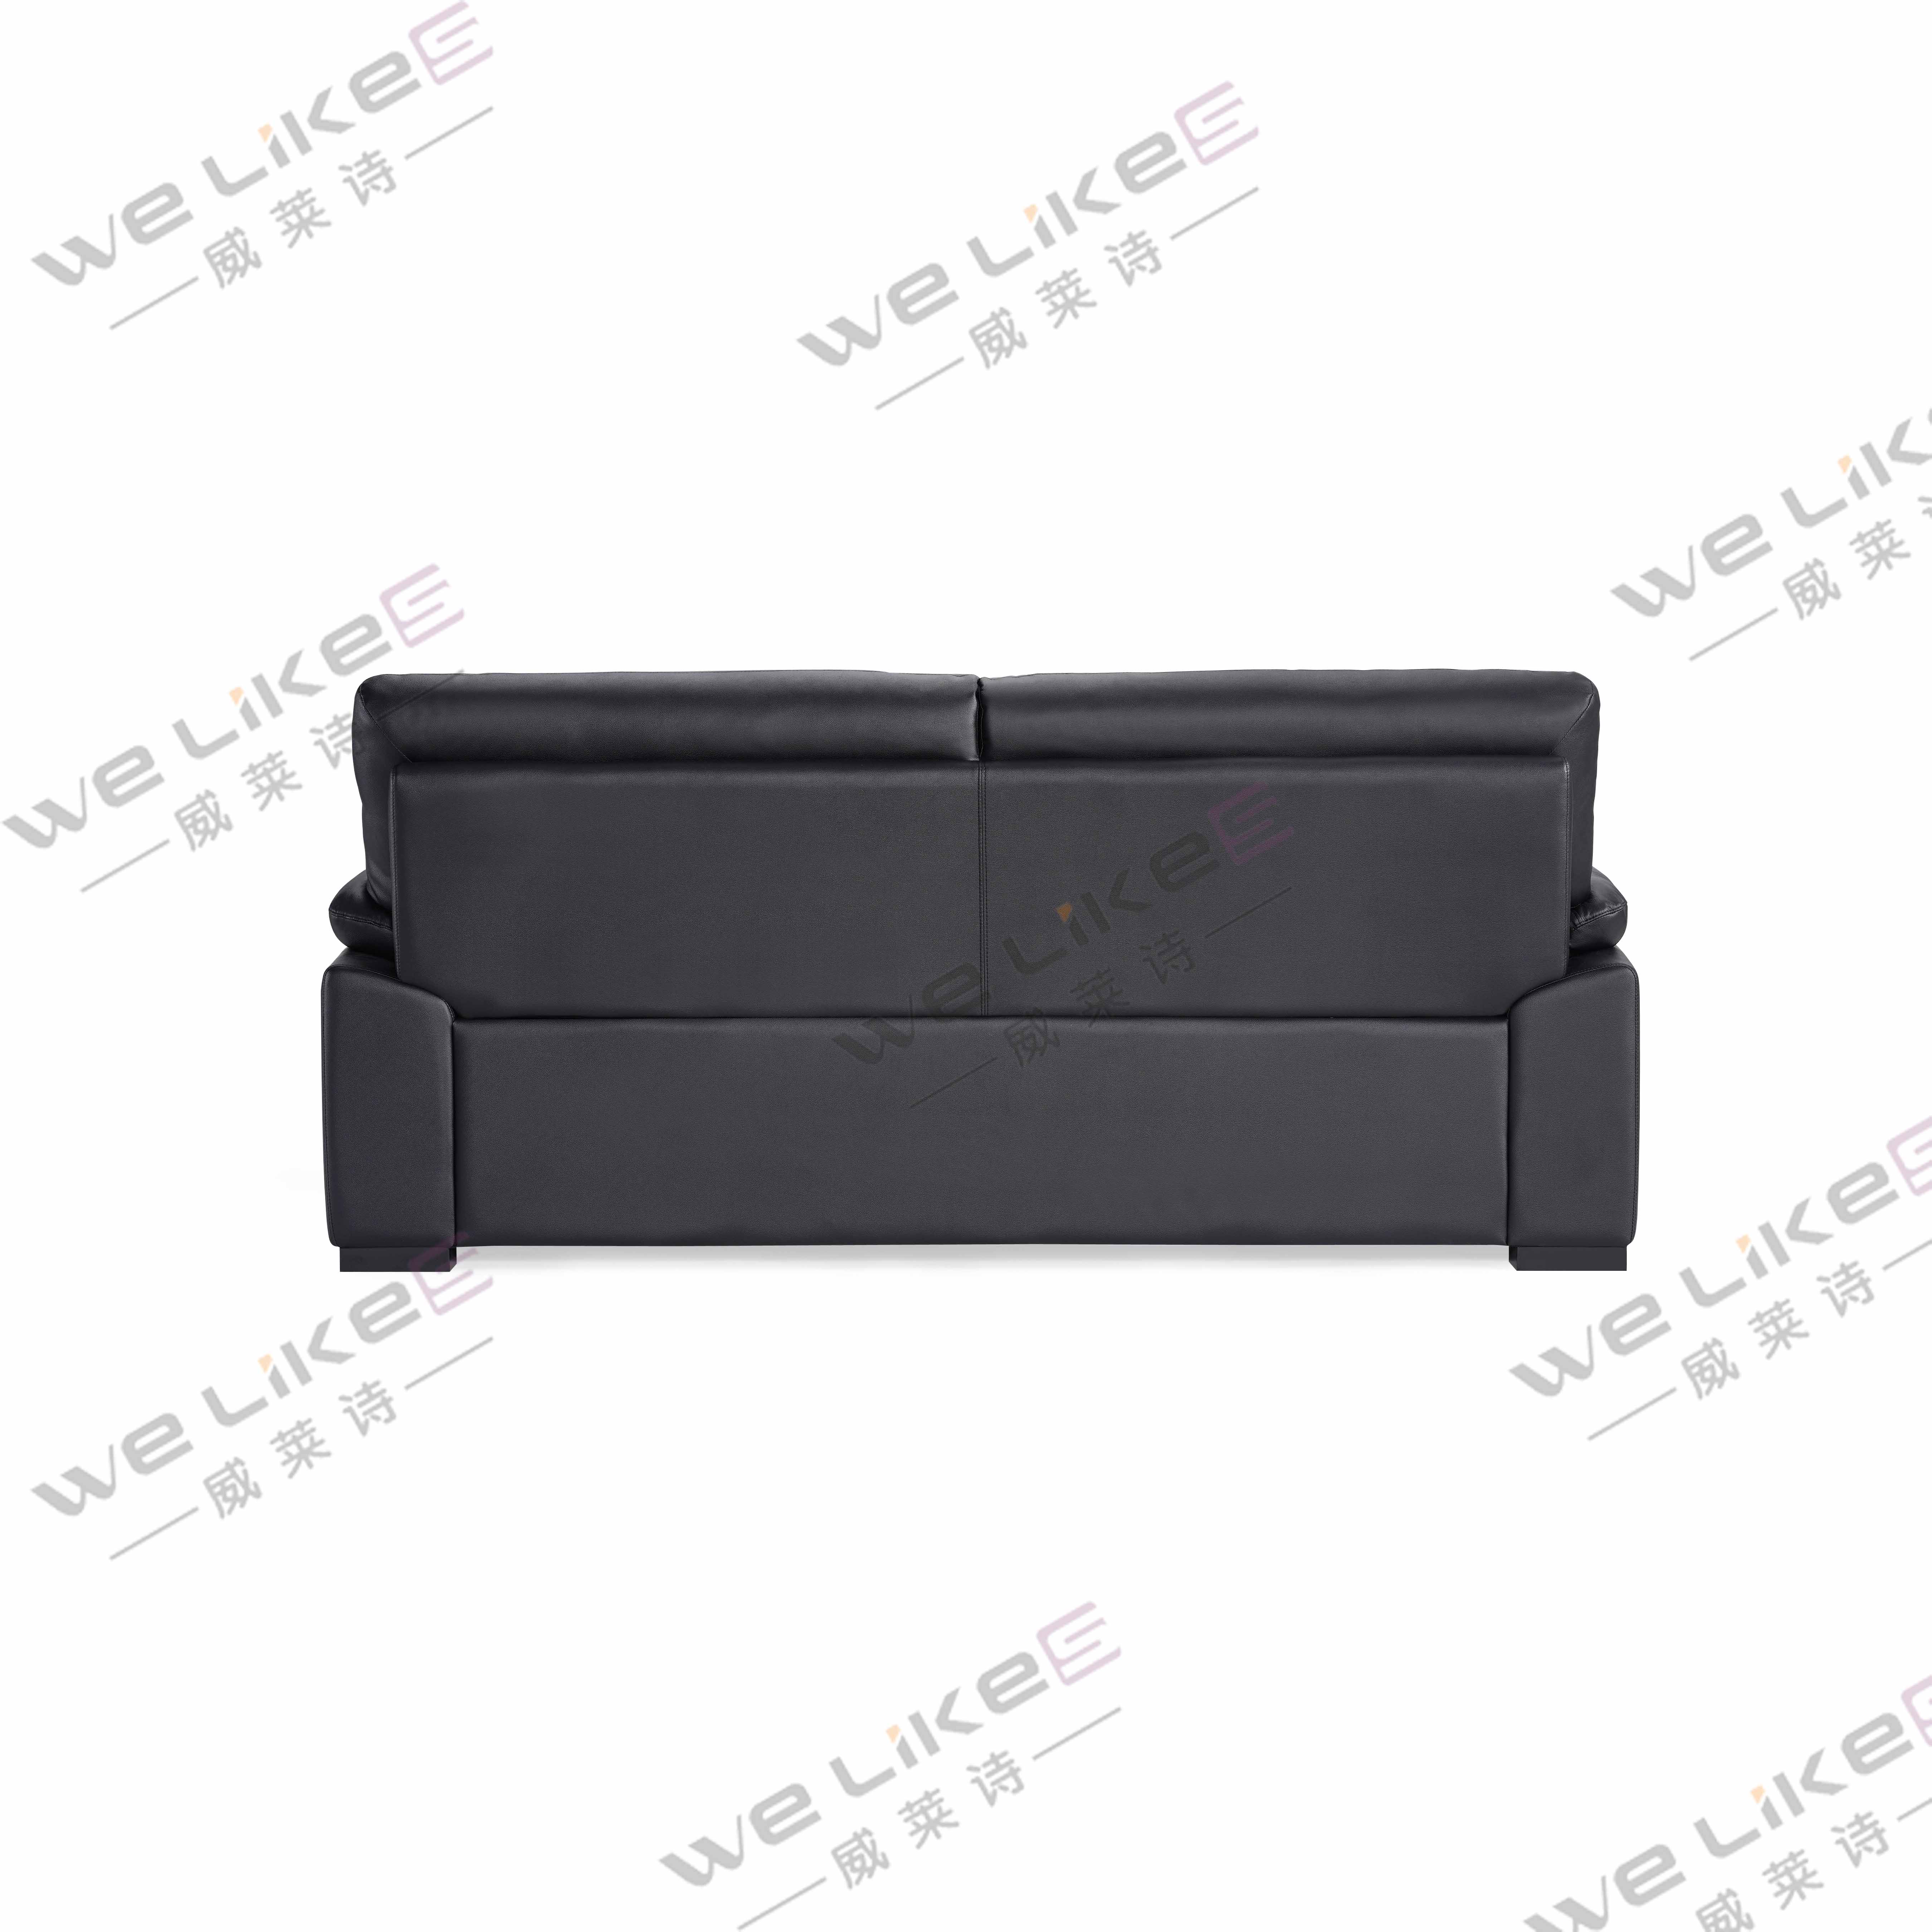 Leather Sofa-Welikes ZM858